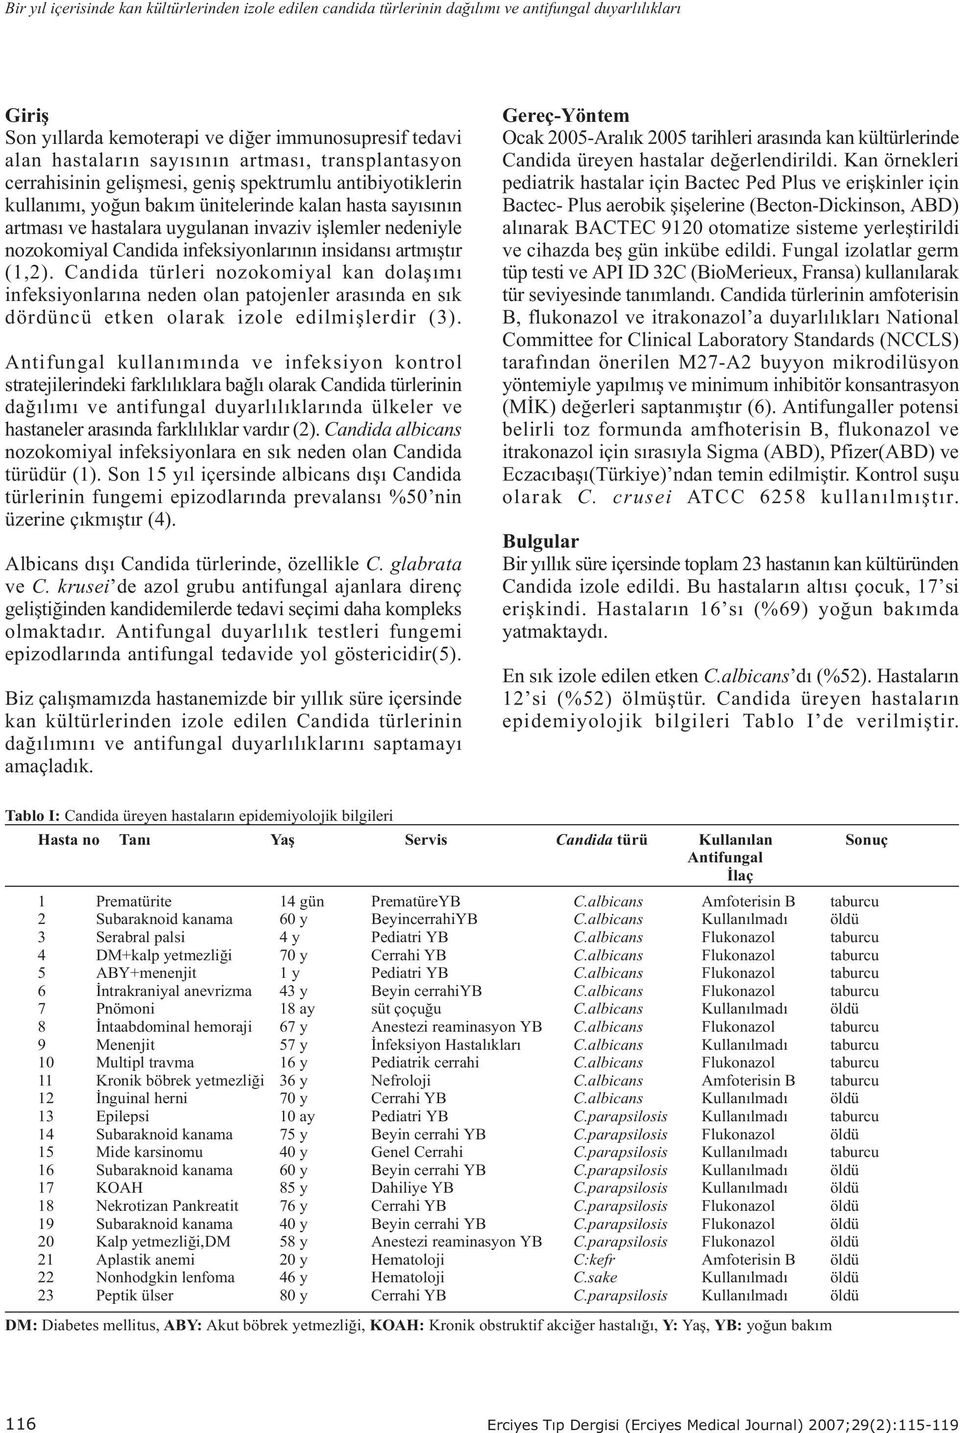 nozokomiyal Candida infeksiyonlarýnýn insidansý artmýþtýr (1,2).